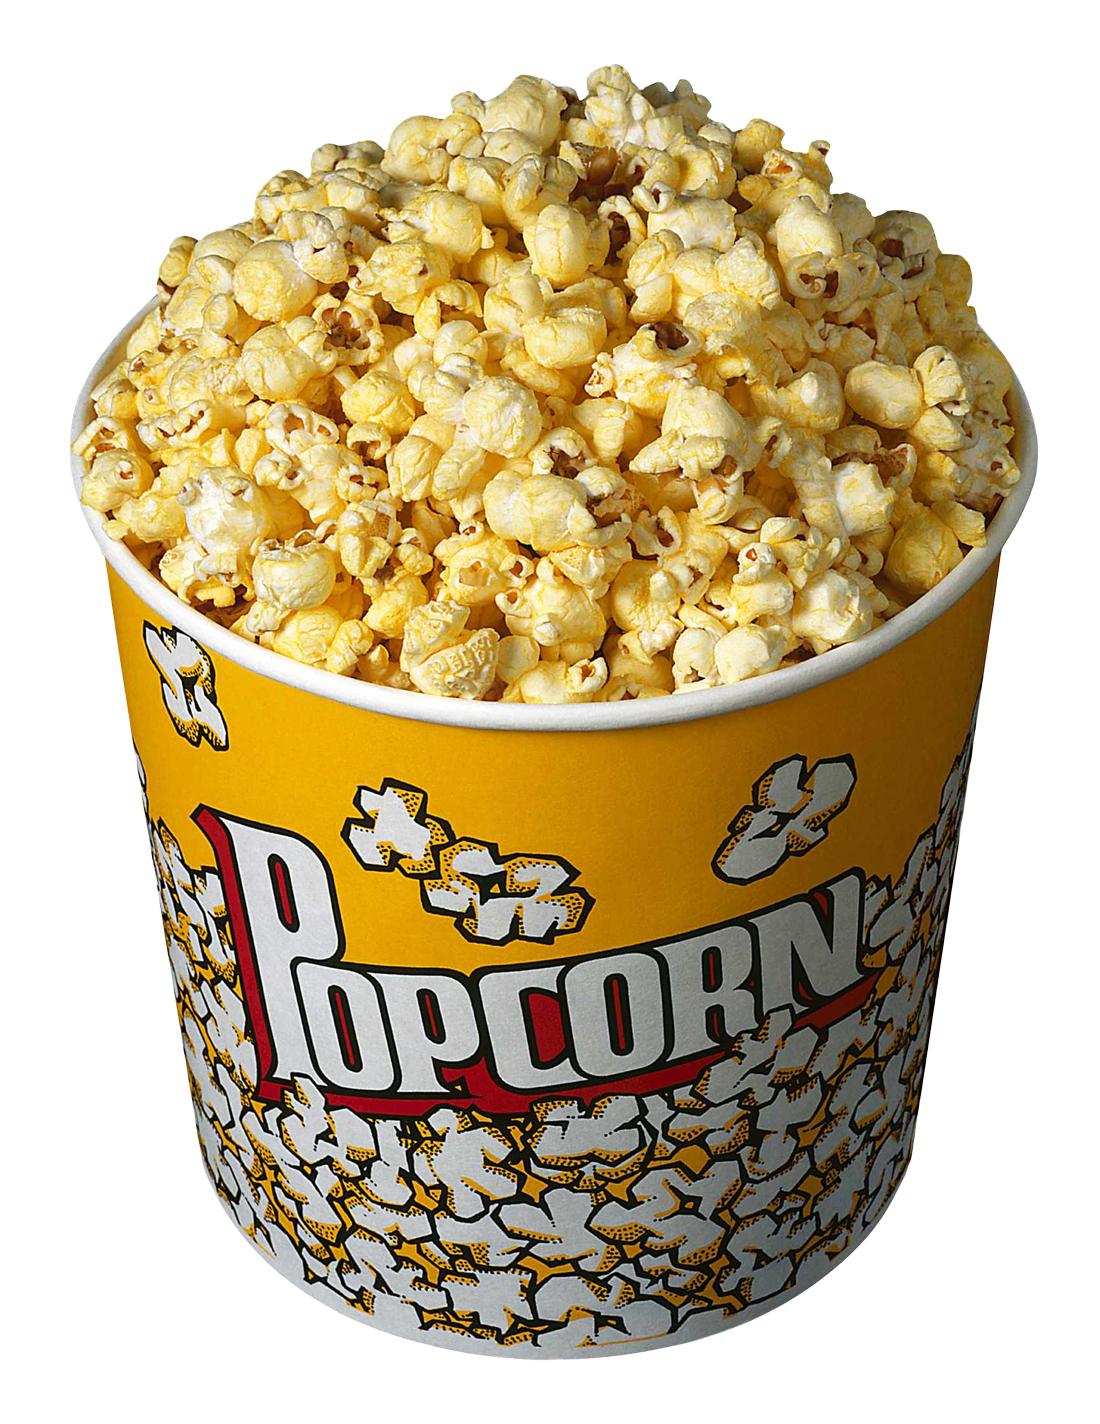 Buttered Popcornin Yellow Bucket